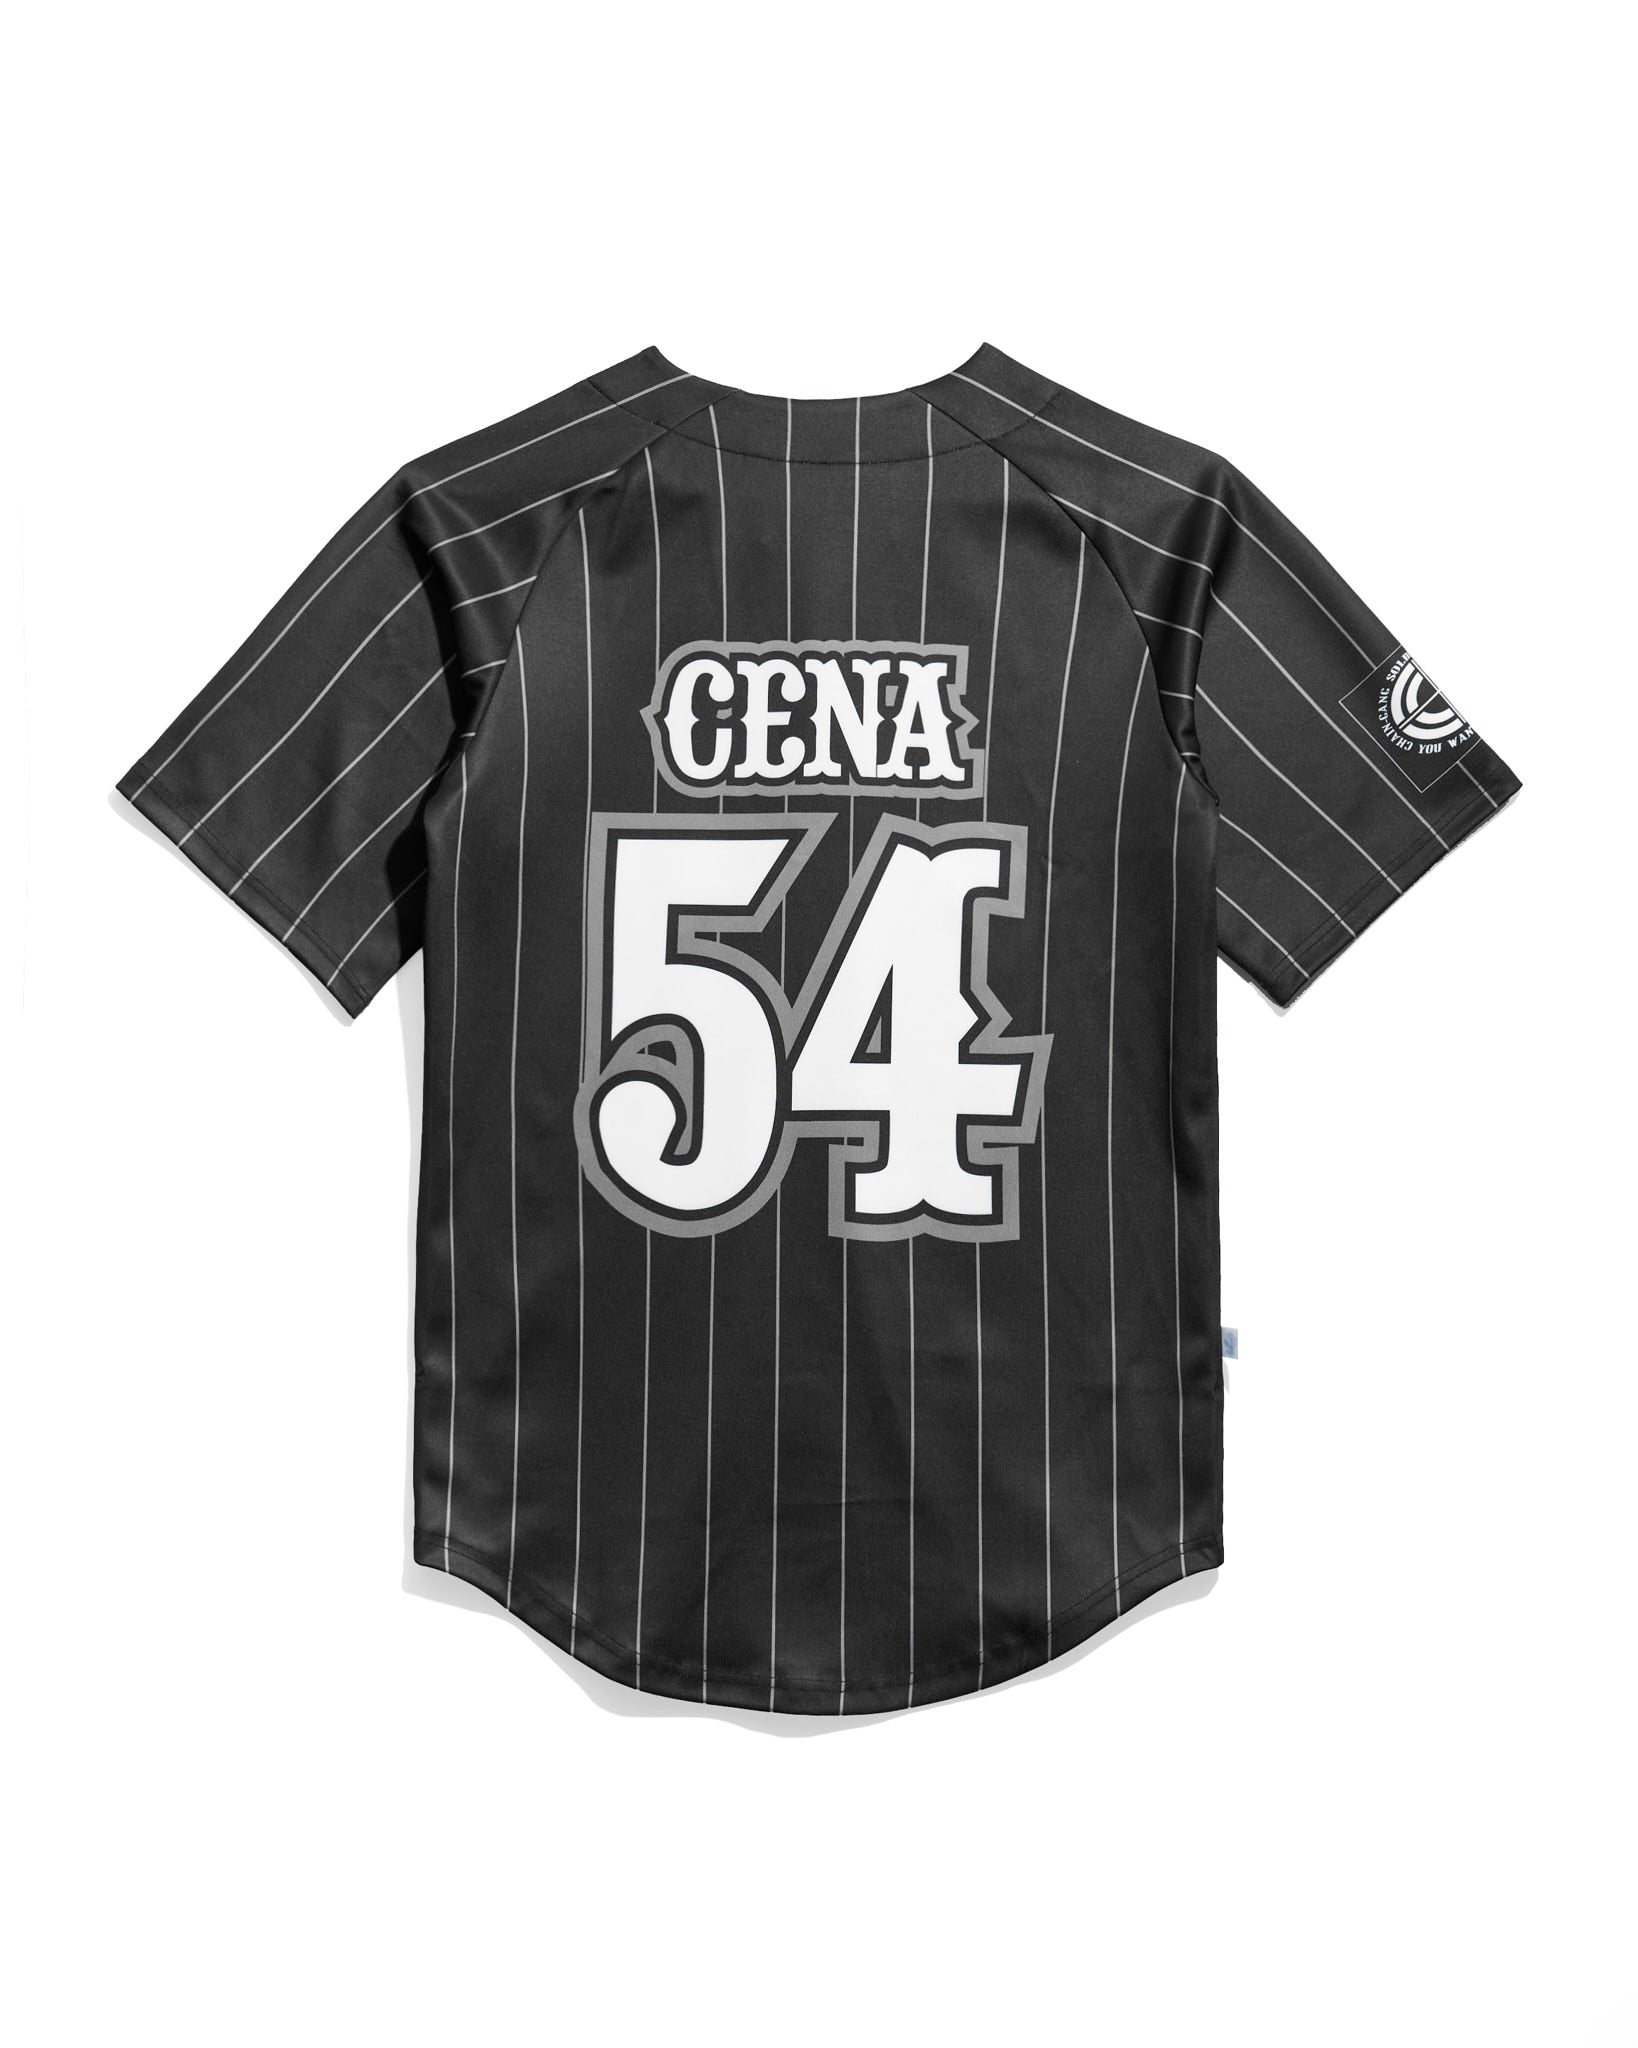 John Cena Chain Gang Black Baseball Jersey